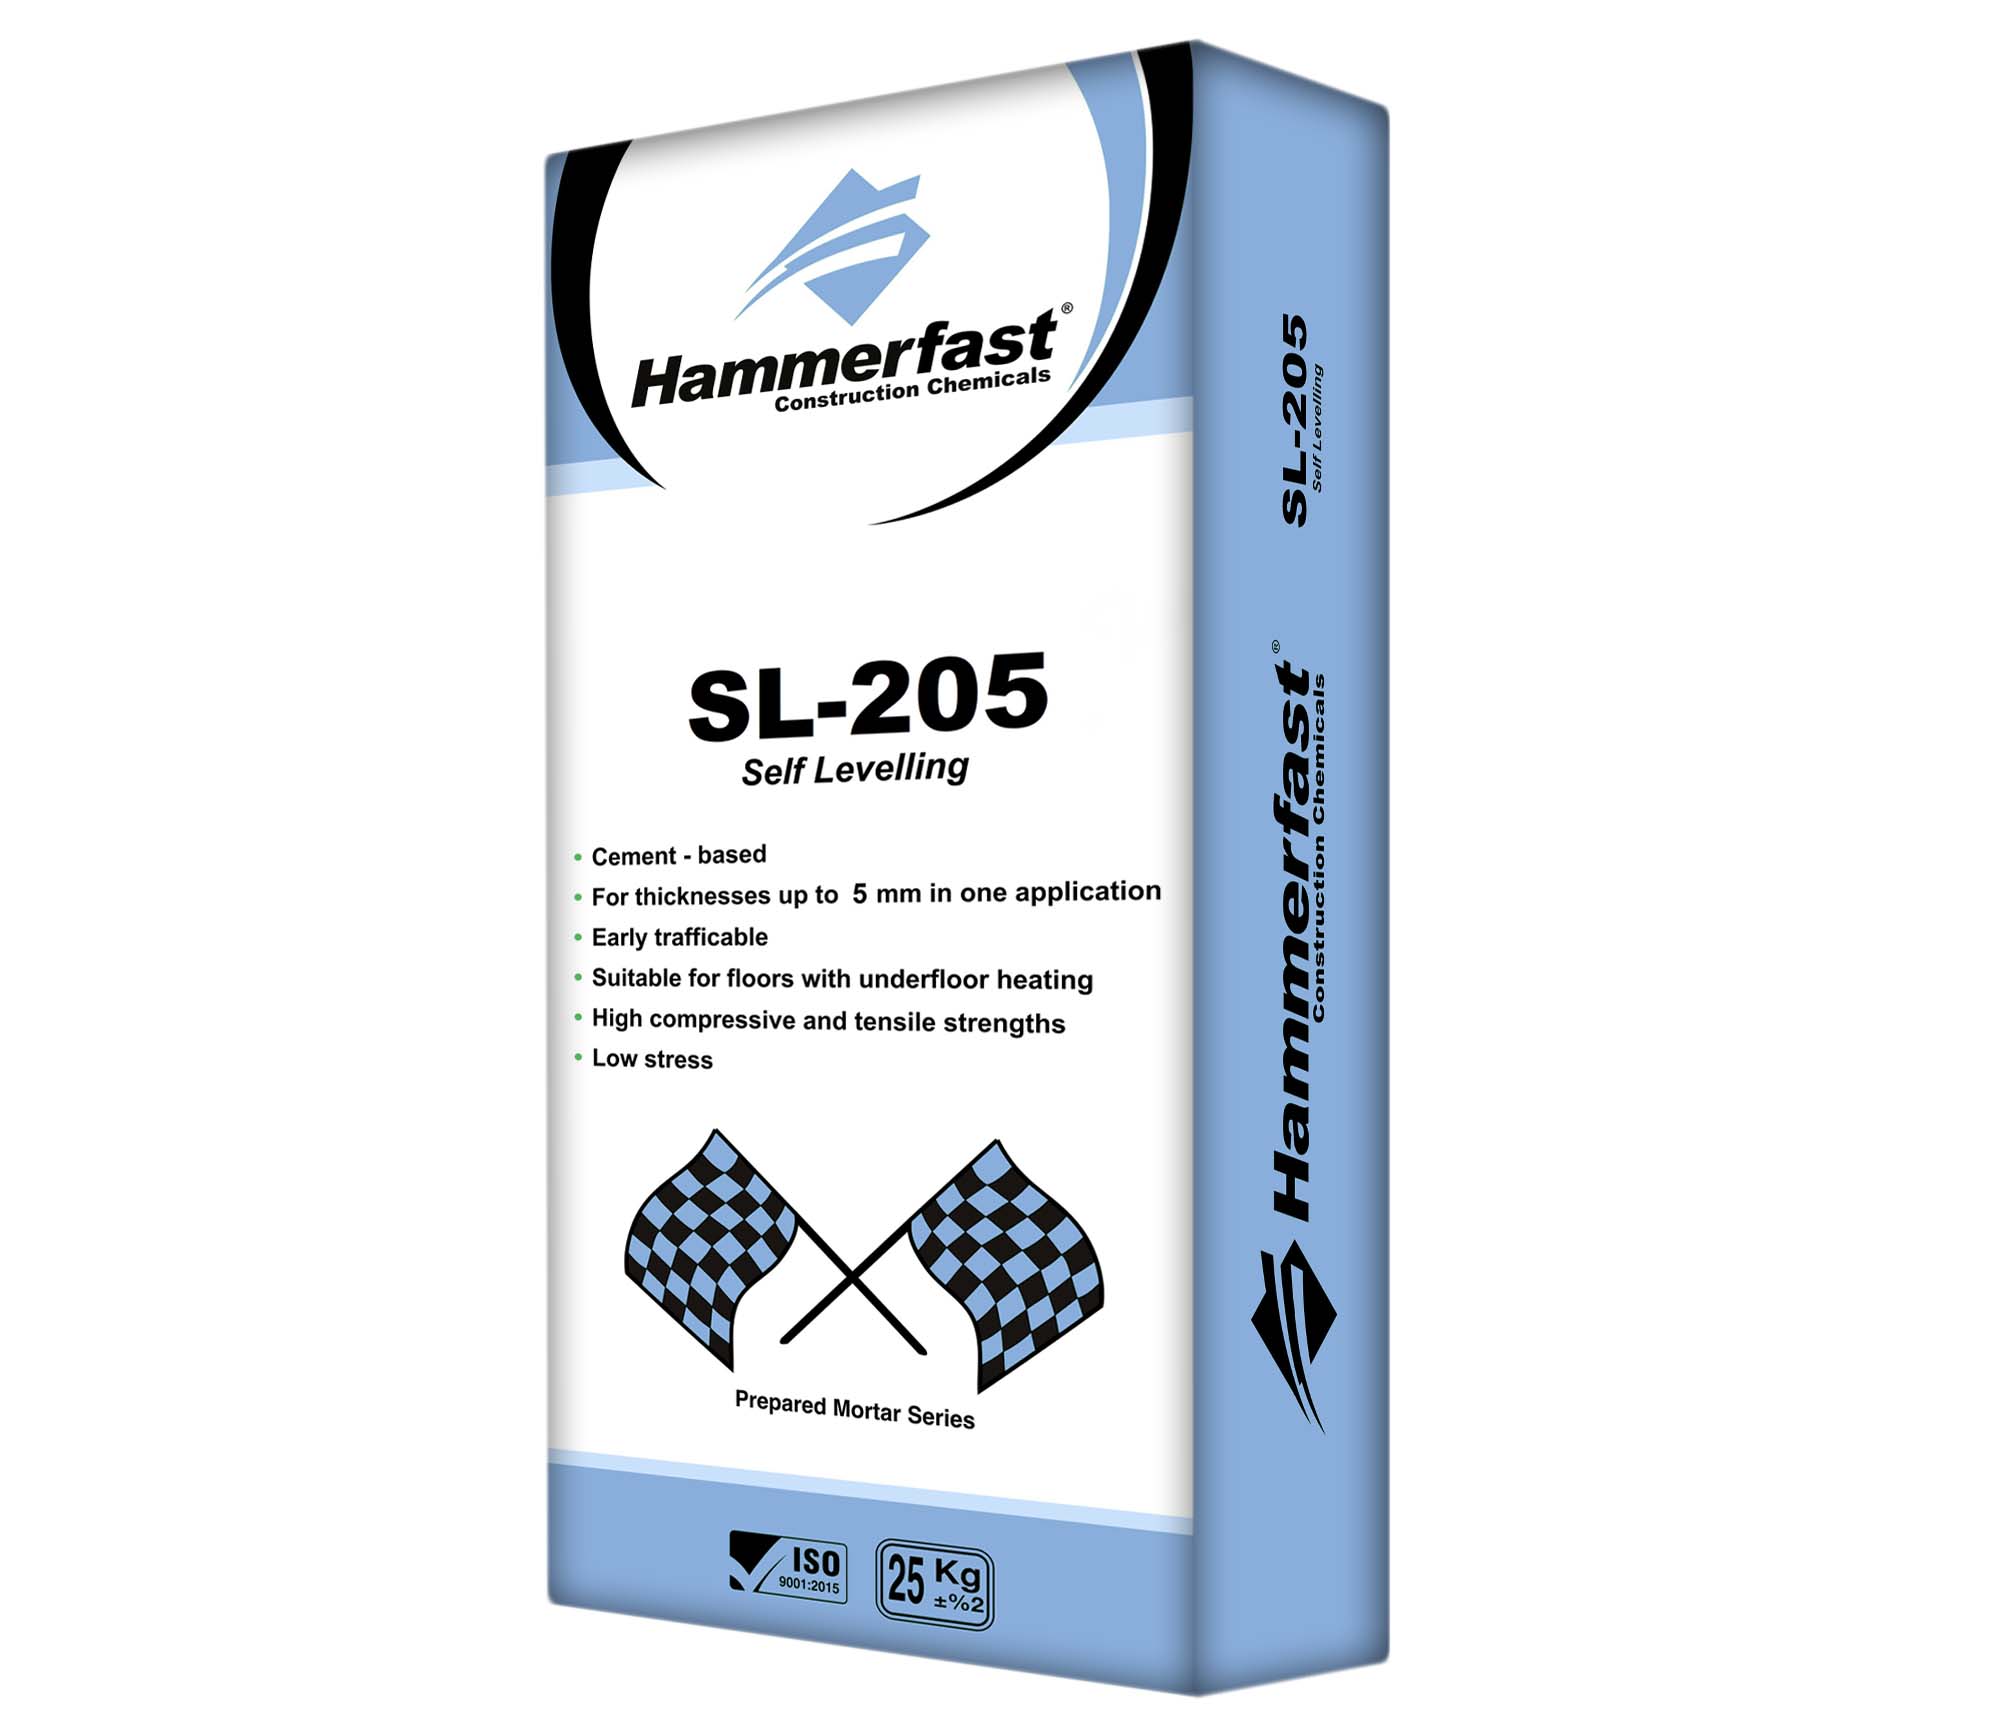 Hammerfast SL 205